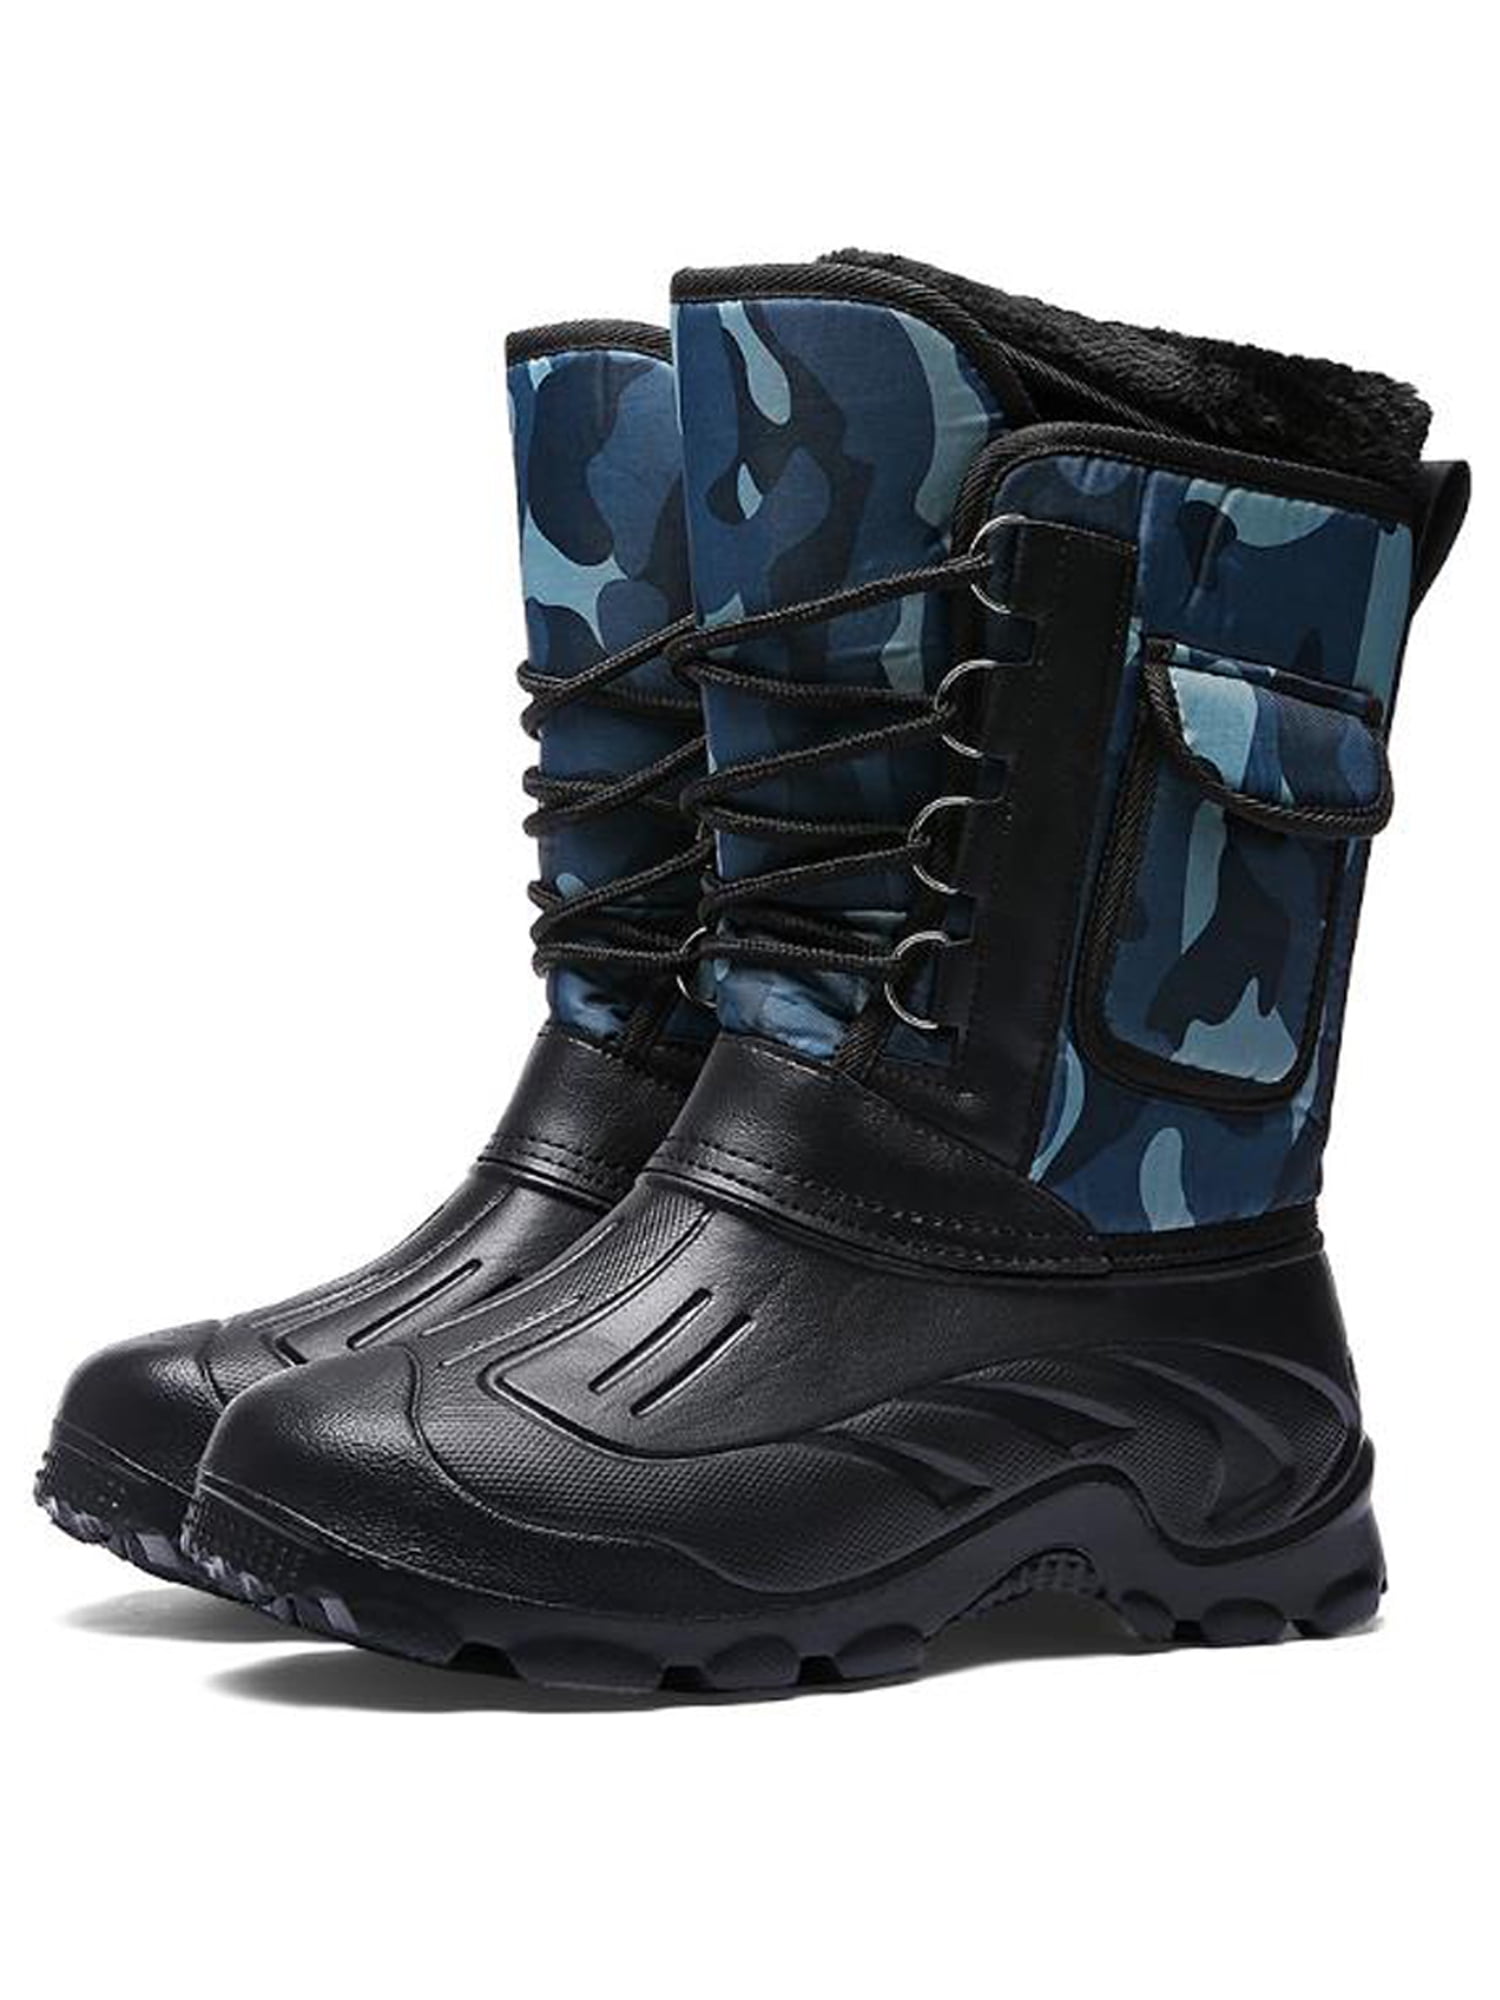 Men's PU Leather Snow Faux Fur Winter Warm Combat Boots Shoes Waterproof